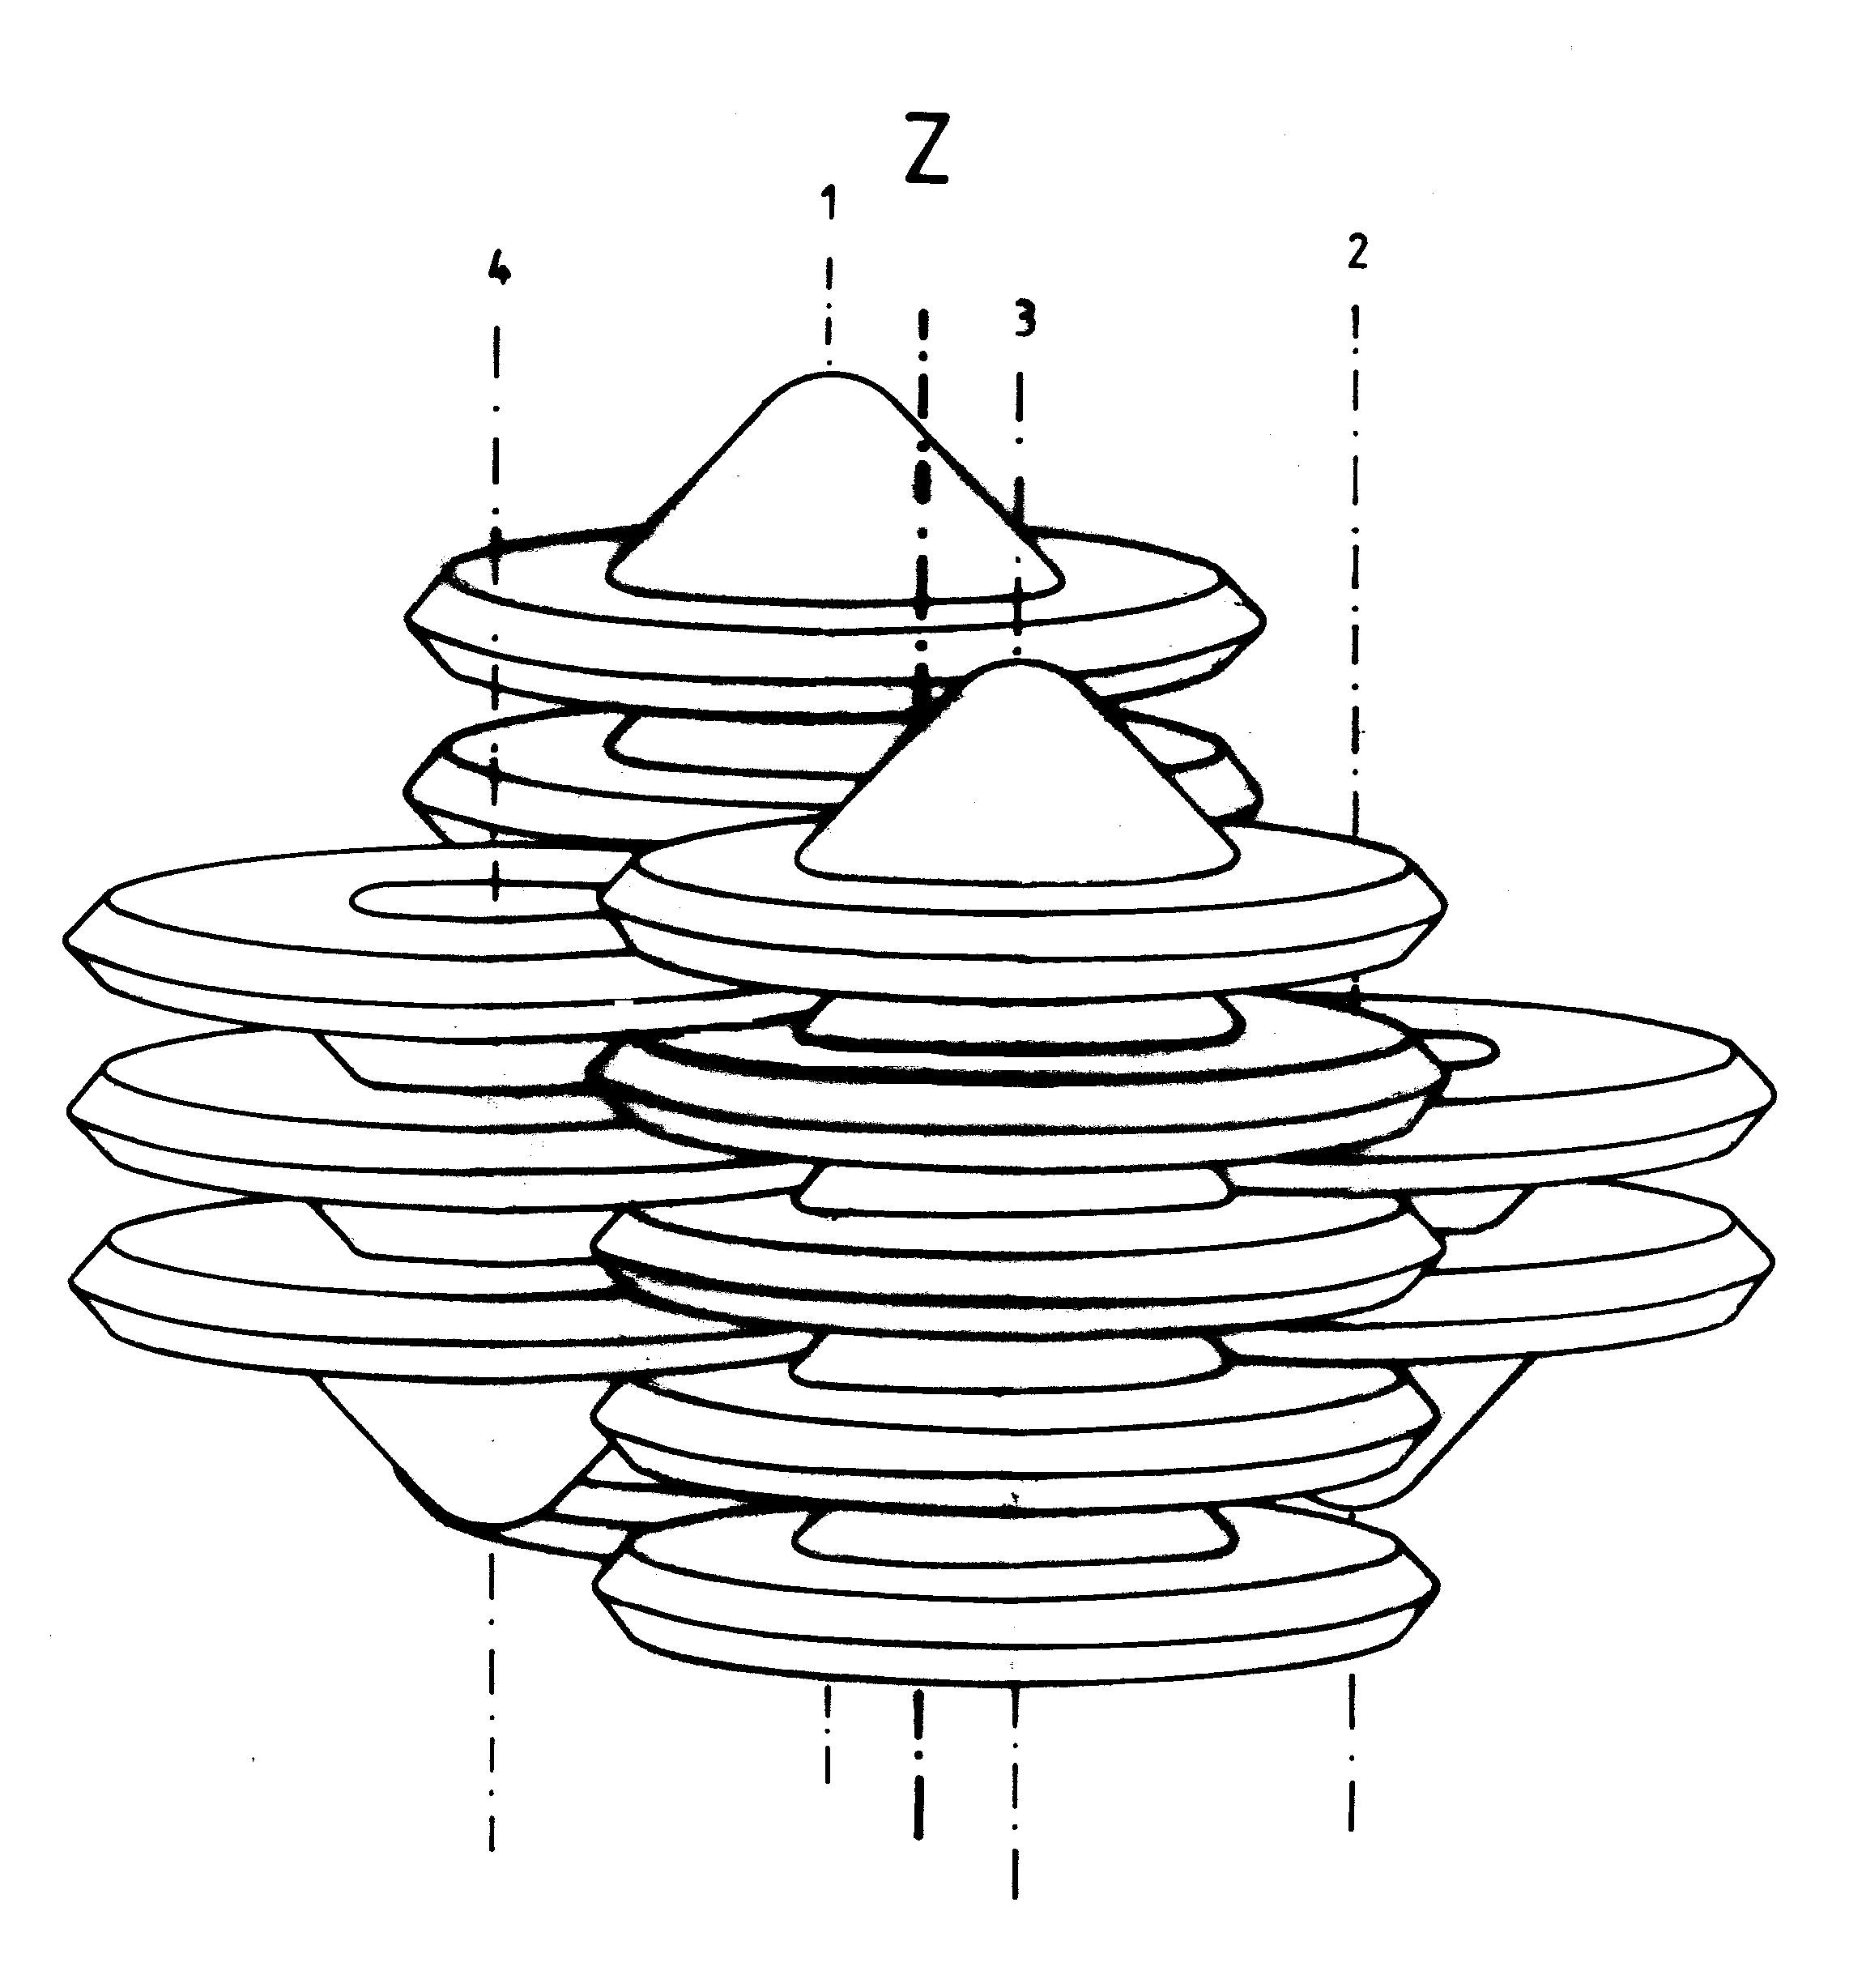 Fig. G16(a)